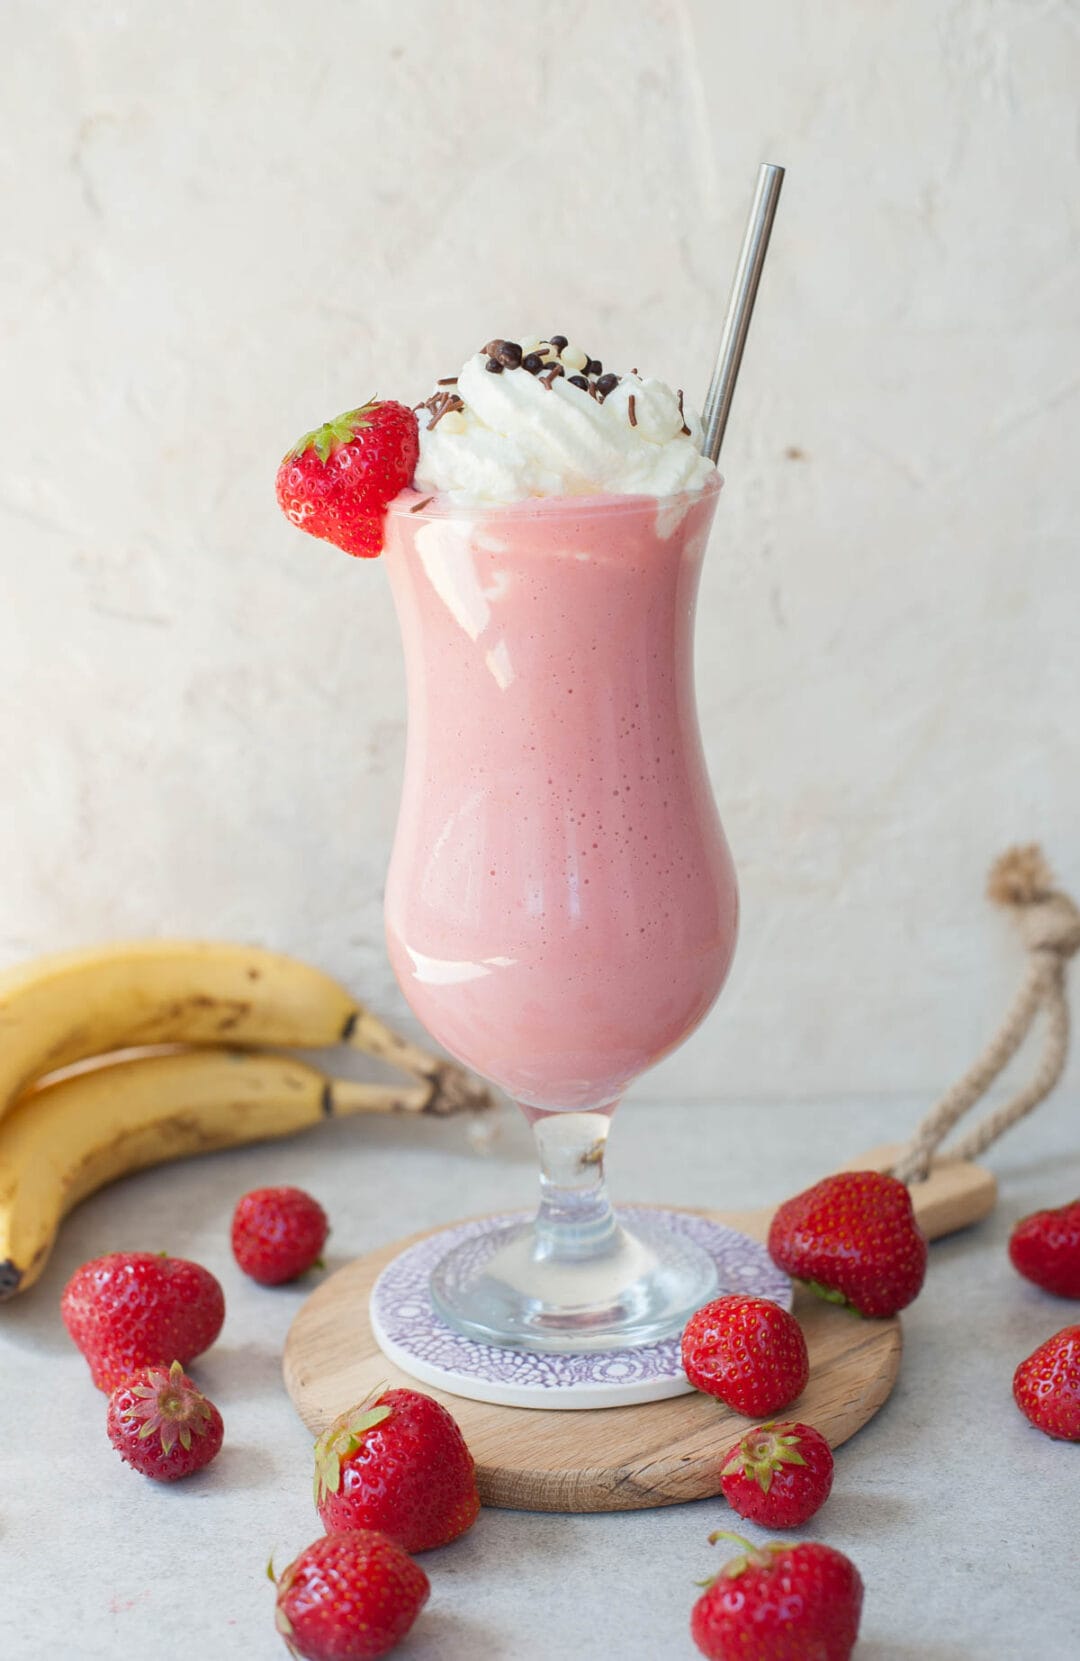 Strawberry banana milkshake - Everyday Delicious